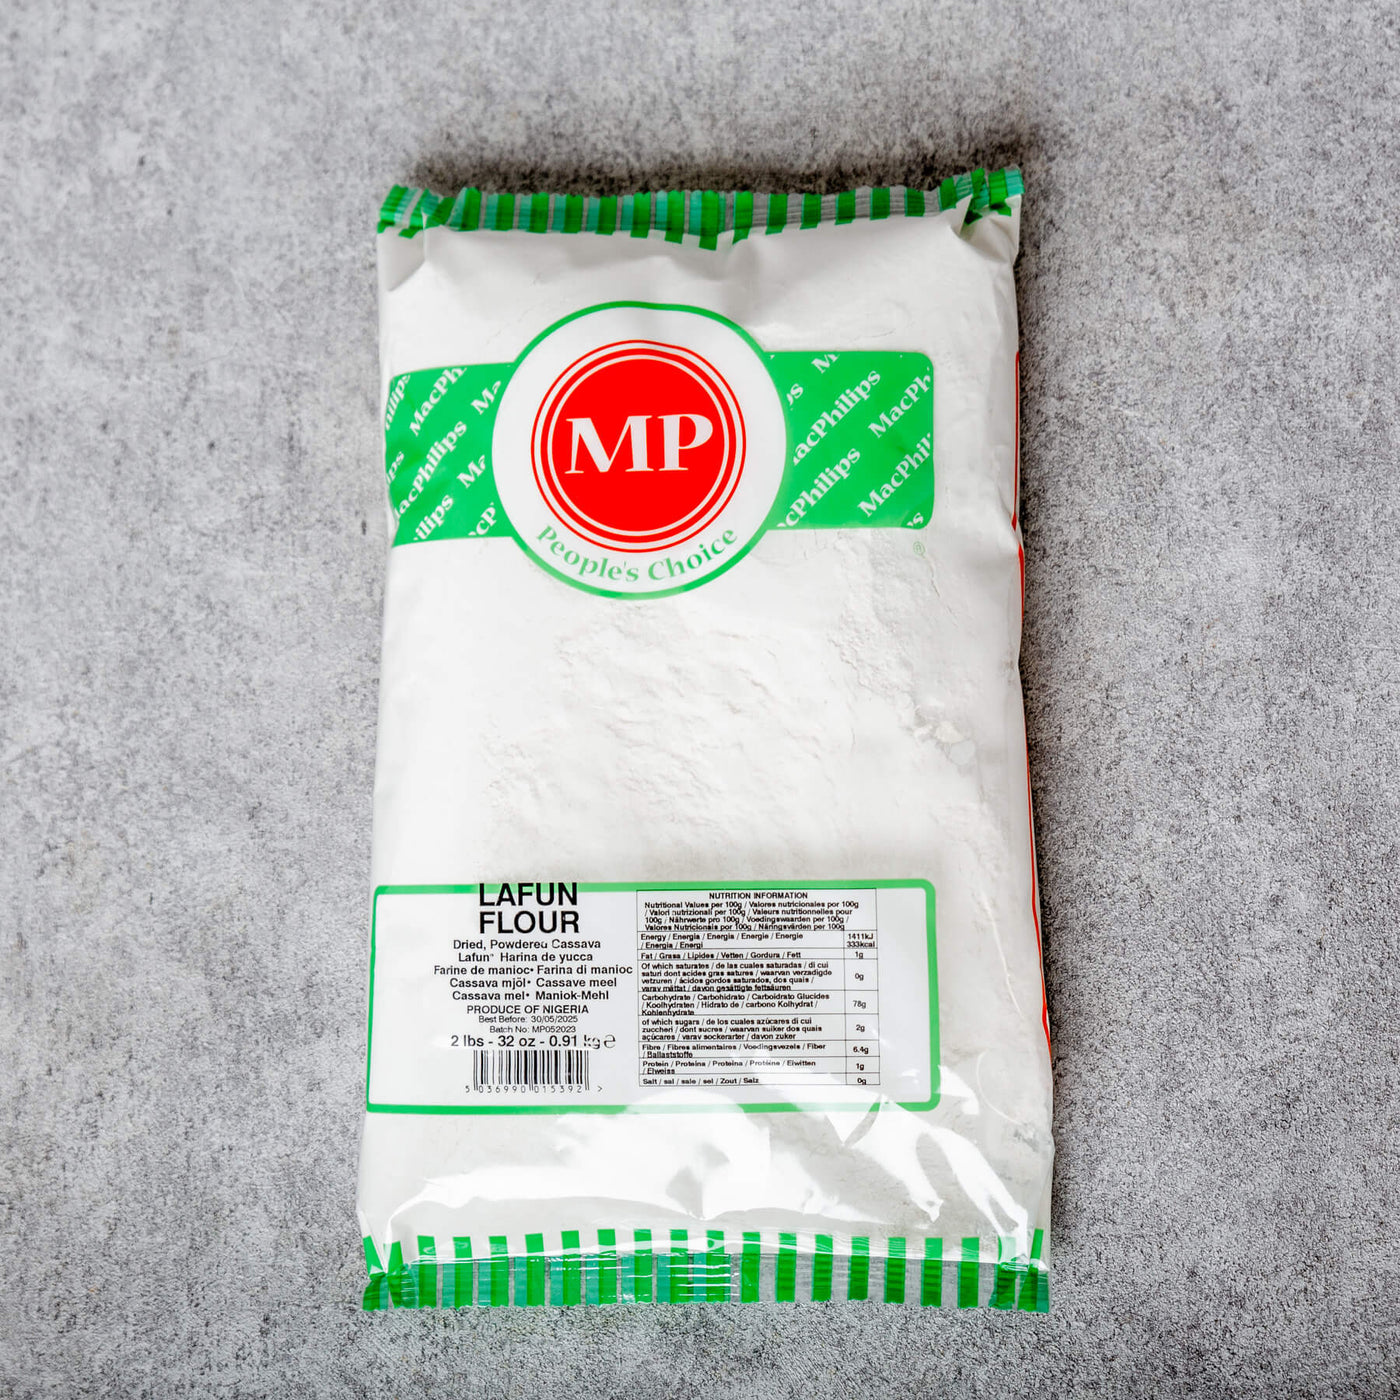 MP - Lafun Flour